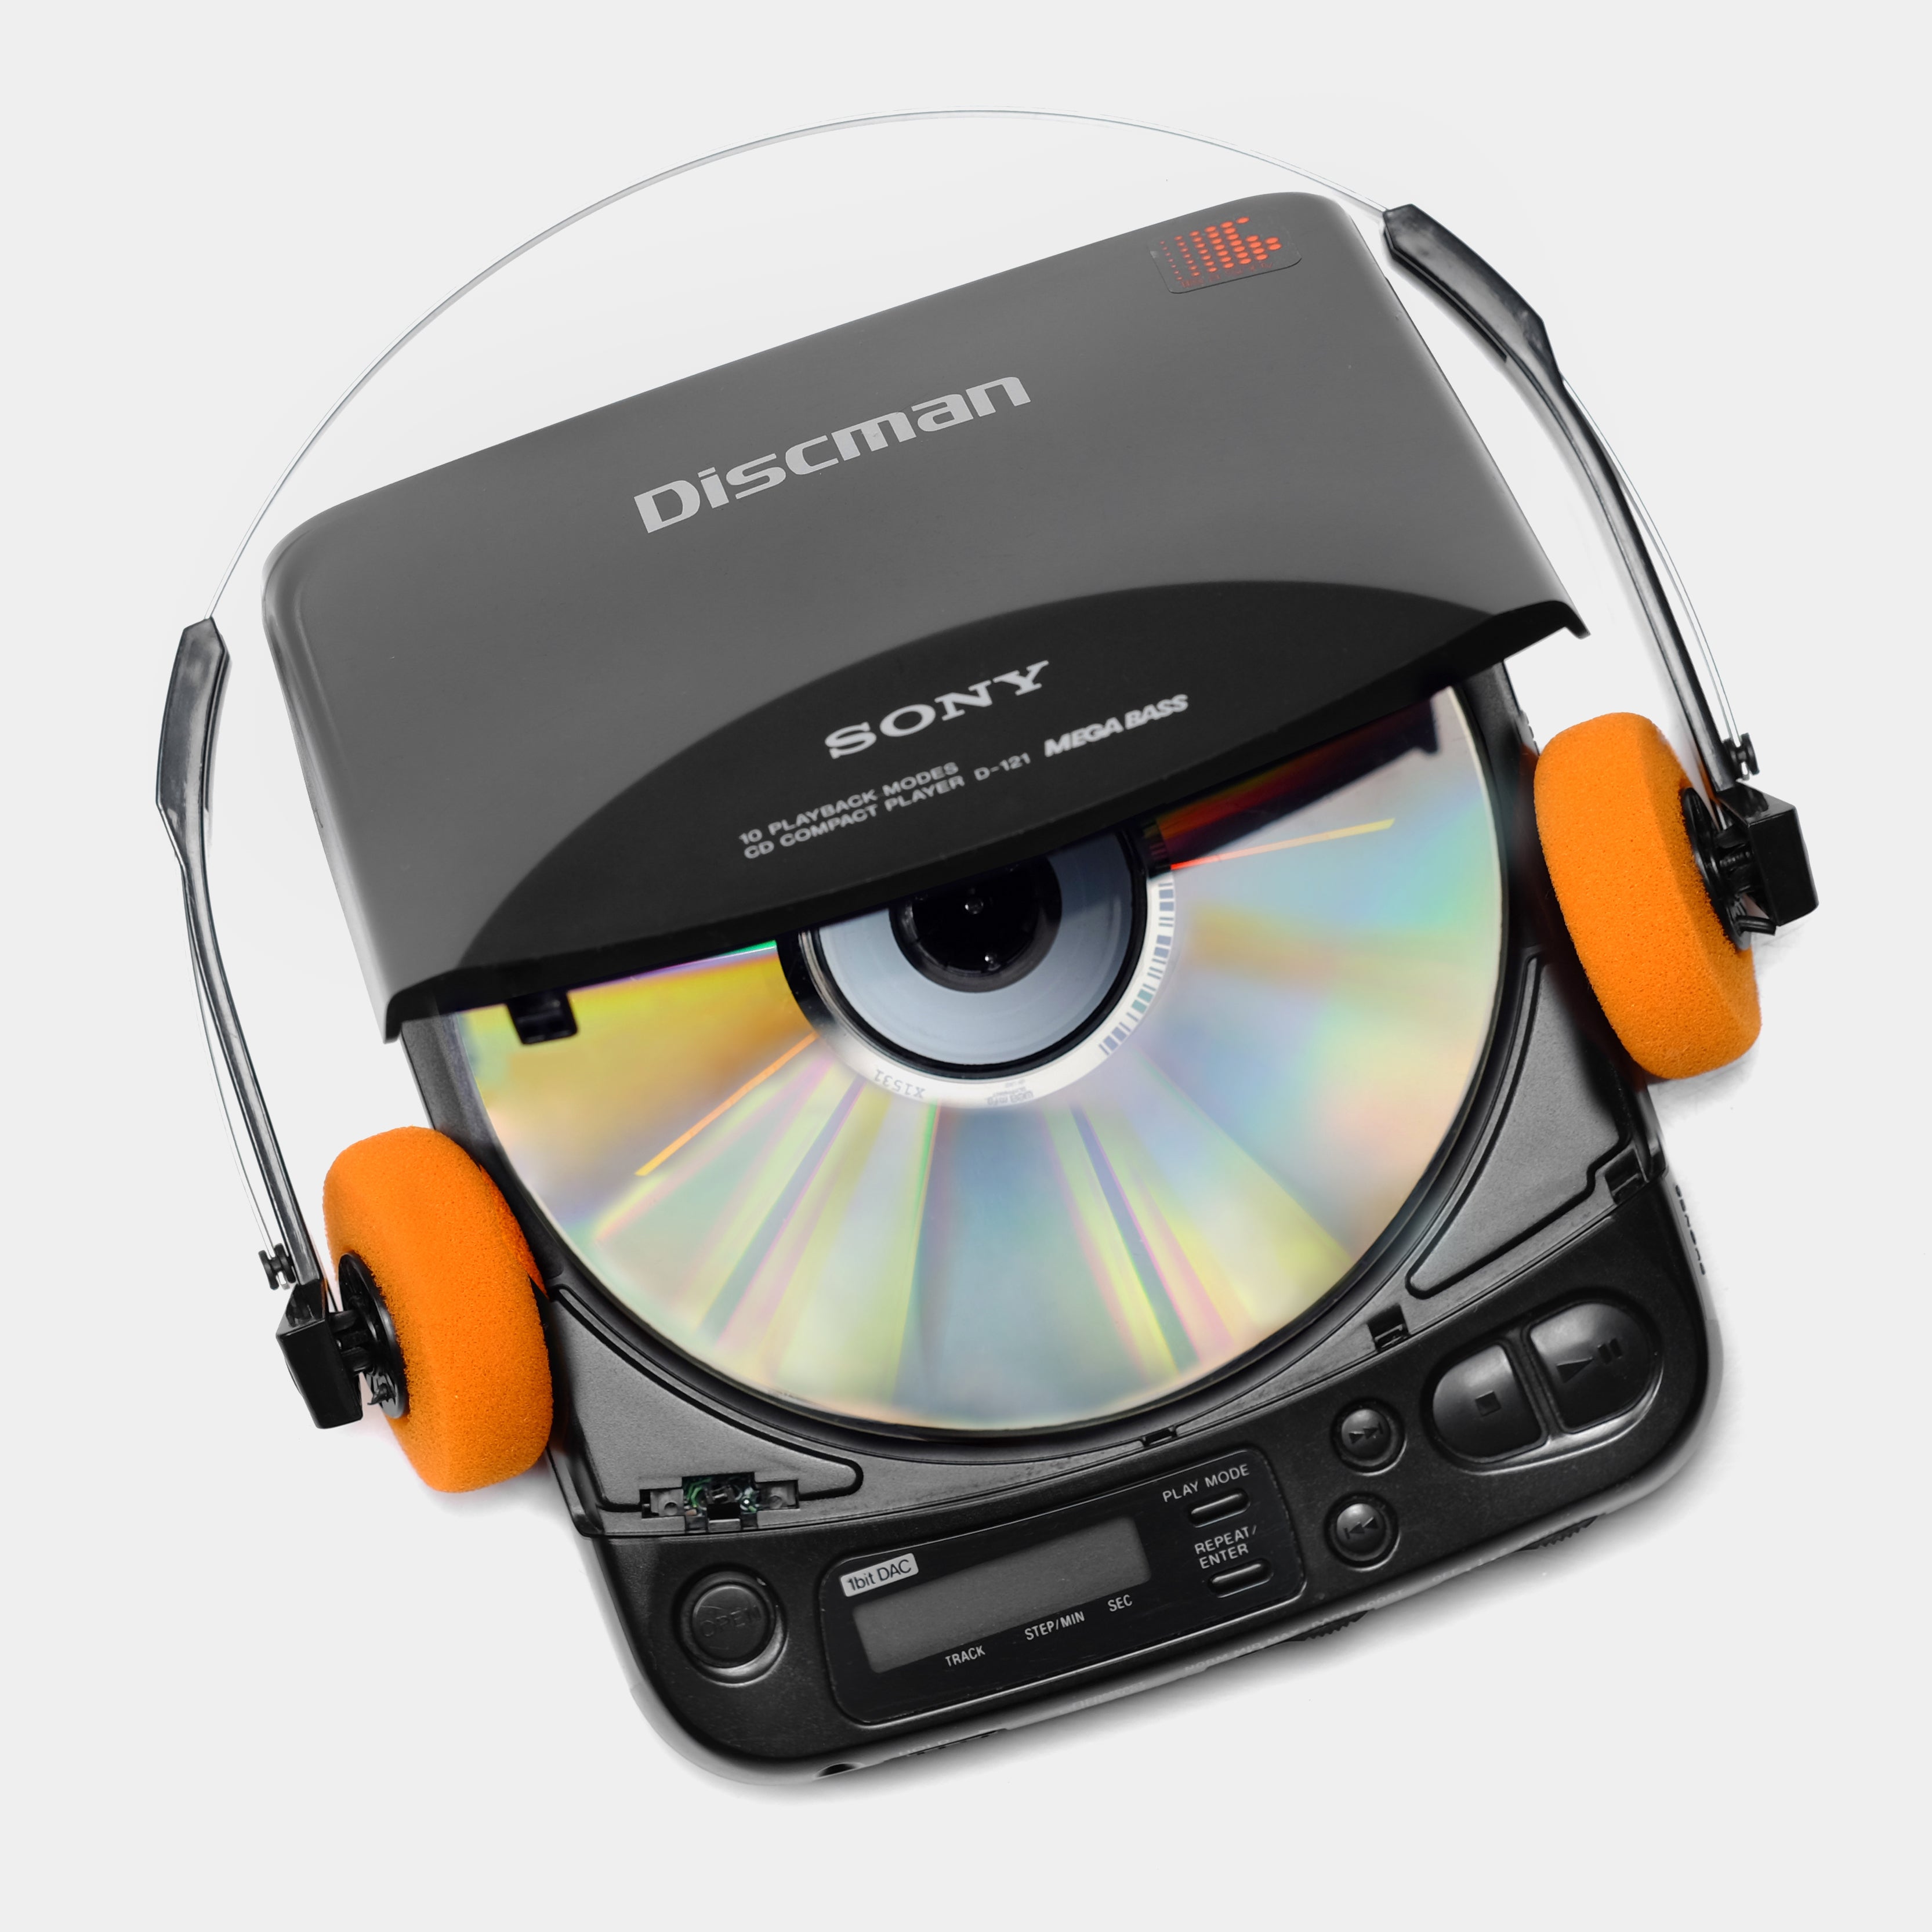 Sony Discman D-121 Portable CD Player